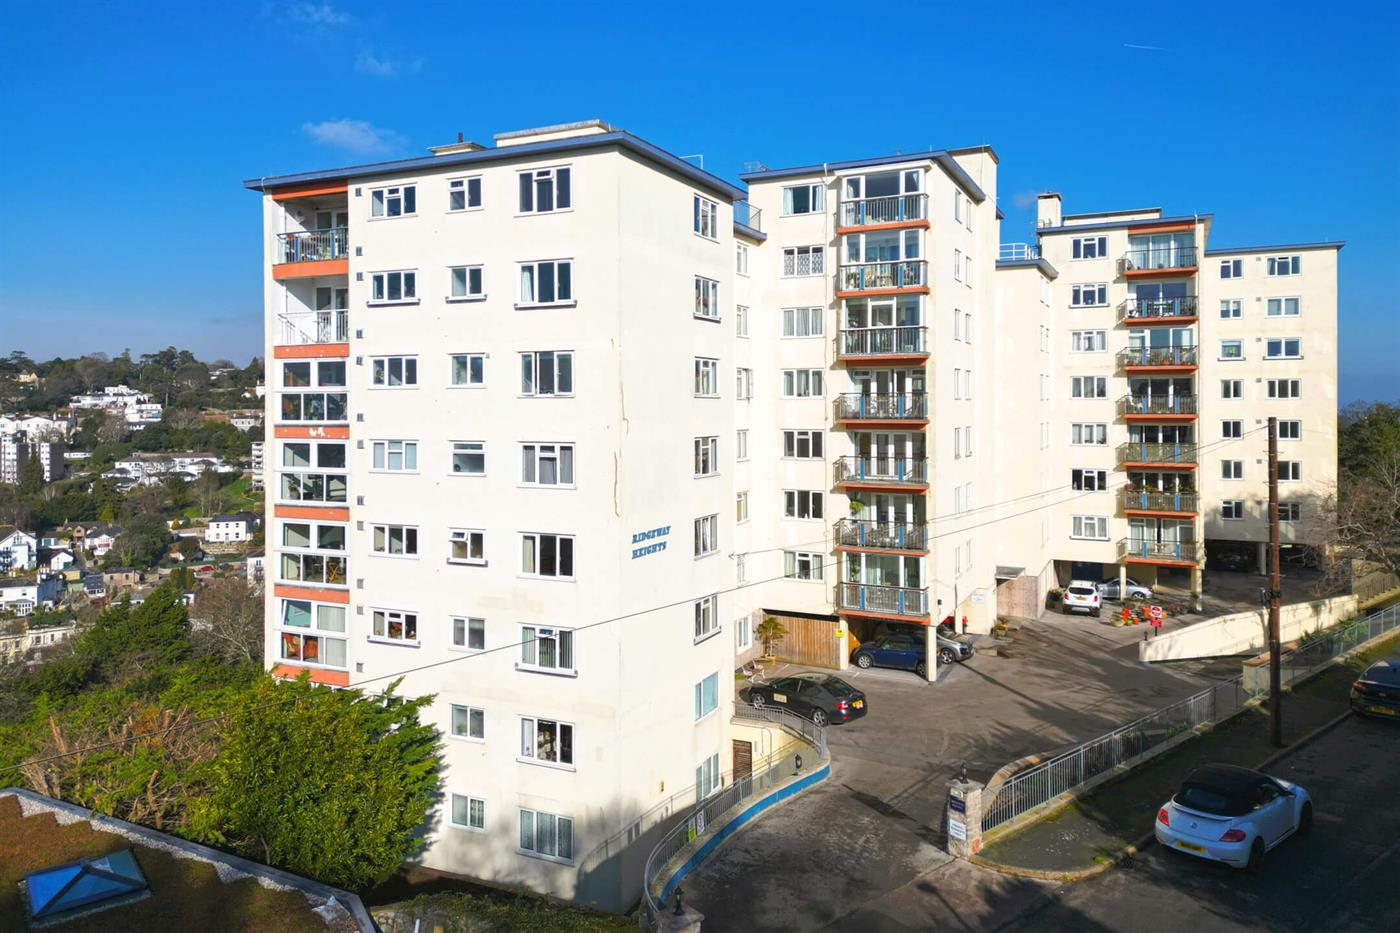 2 Bedroom Apartment to Rent (Let): Ridgeway Heights, Ridgeway Road, Lincombes, Torquay, TQ1 2ND